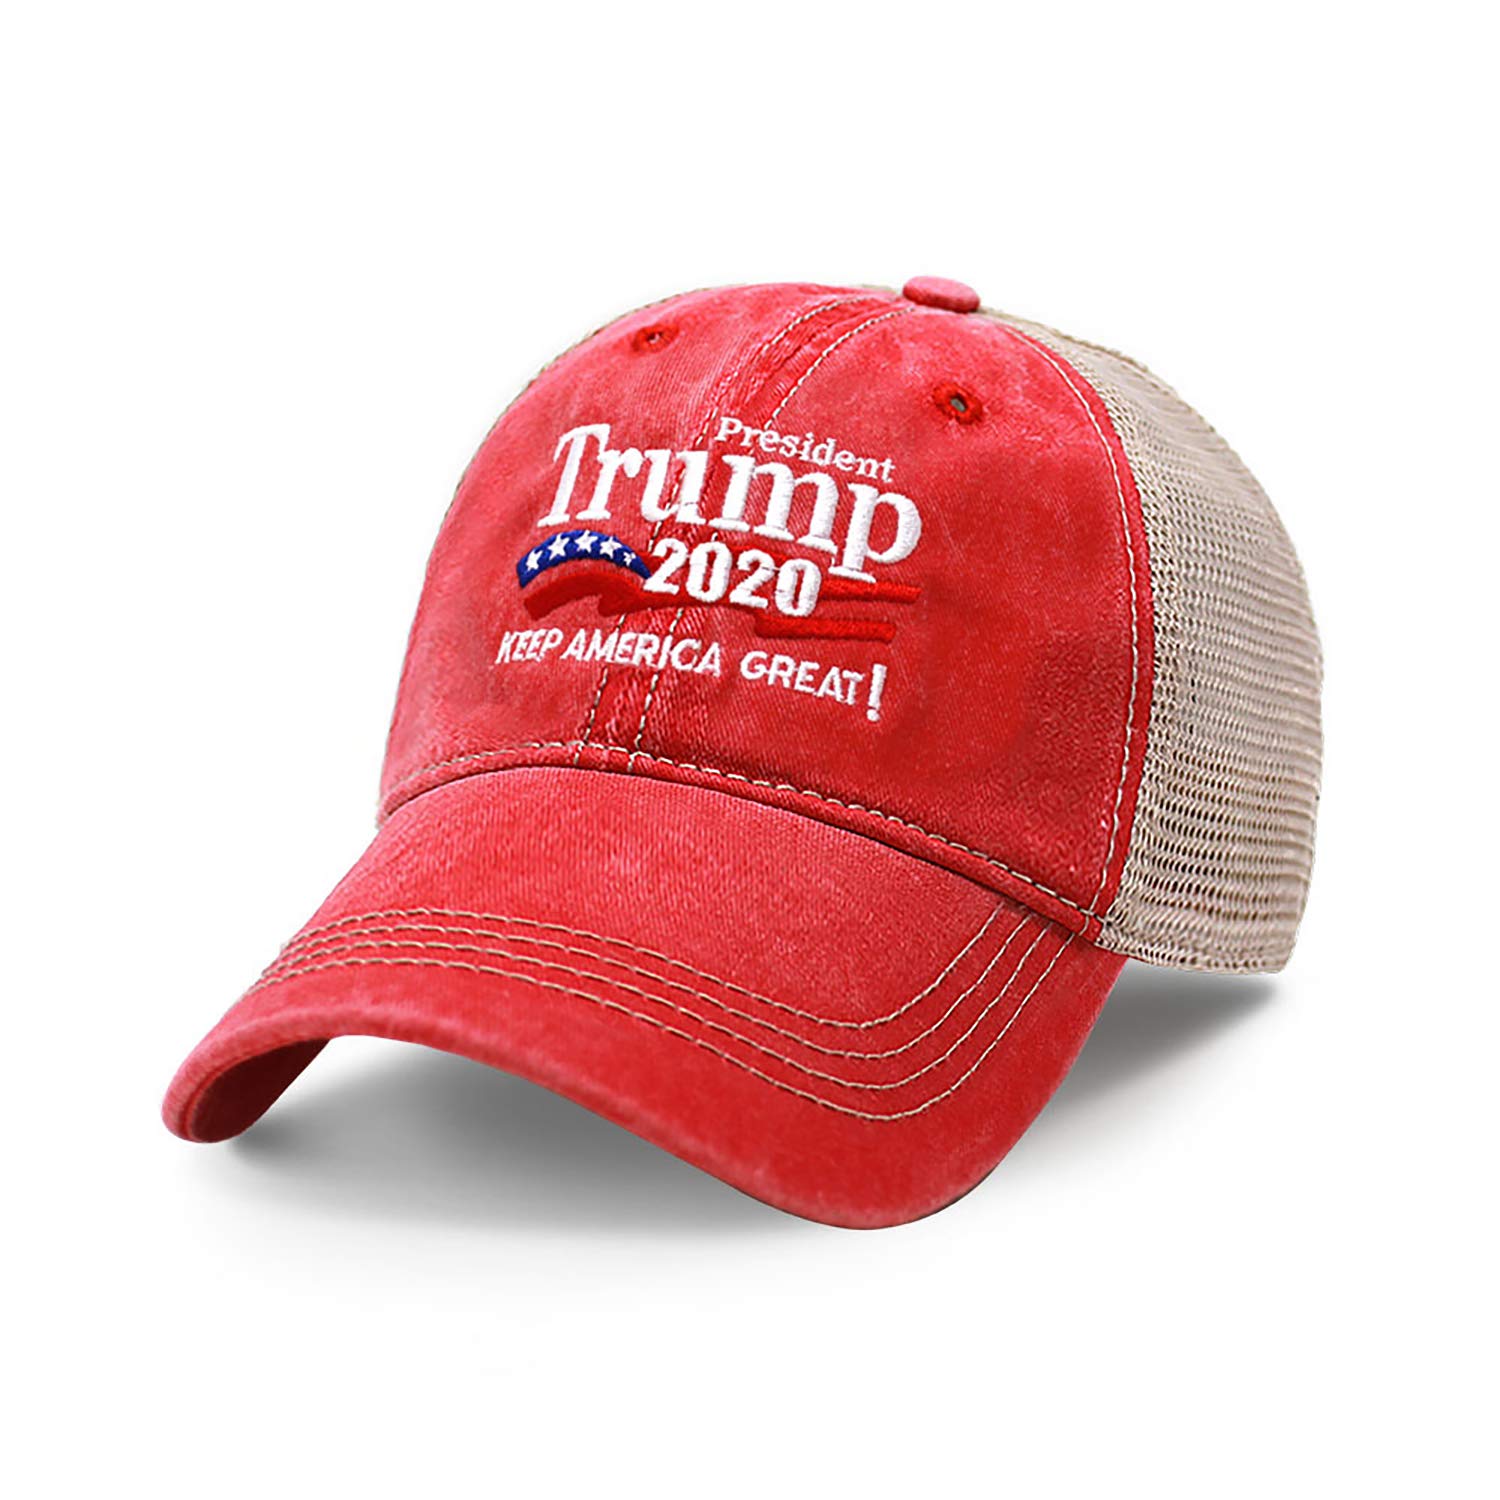 CHOK.LIDS Trump 2024 Keep America Great Campaign Embroidered US Hat Baseball Trucker Cap New TC101/2